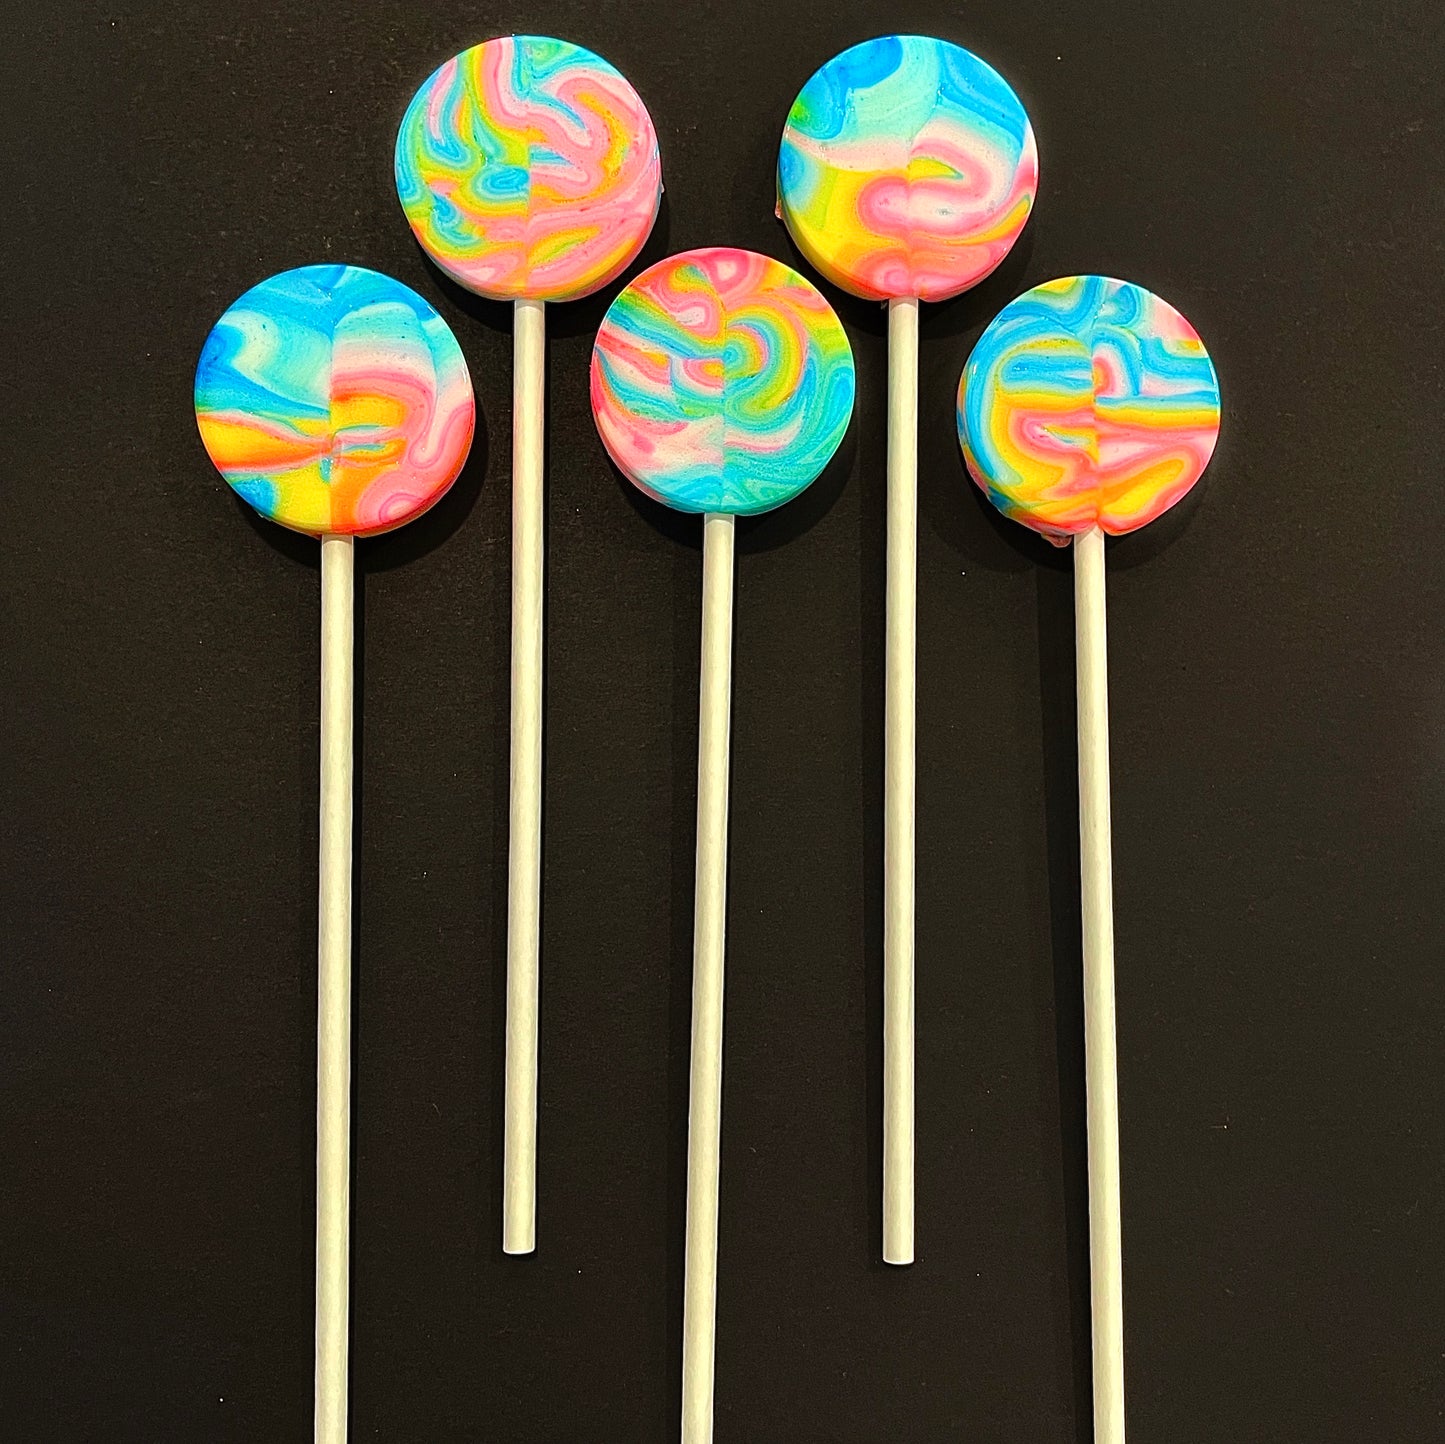 Mini Lollipops